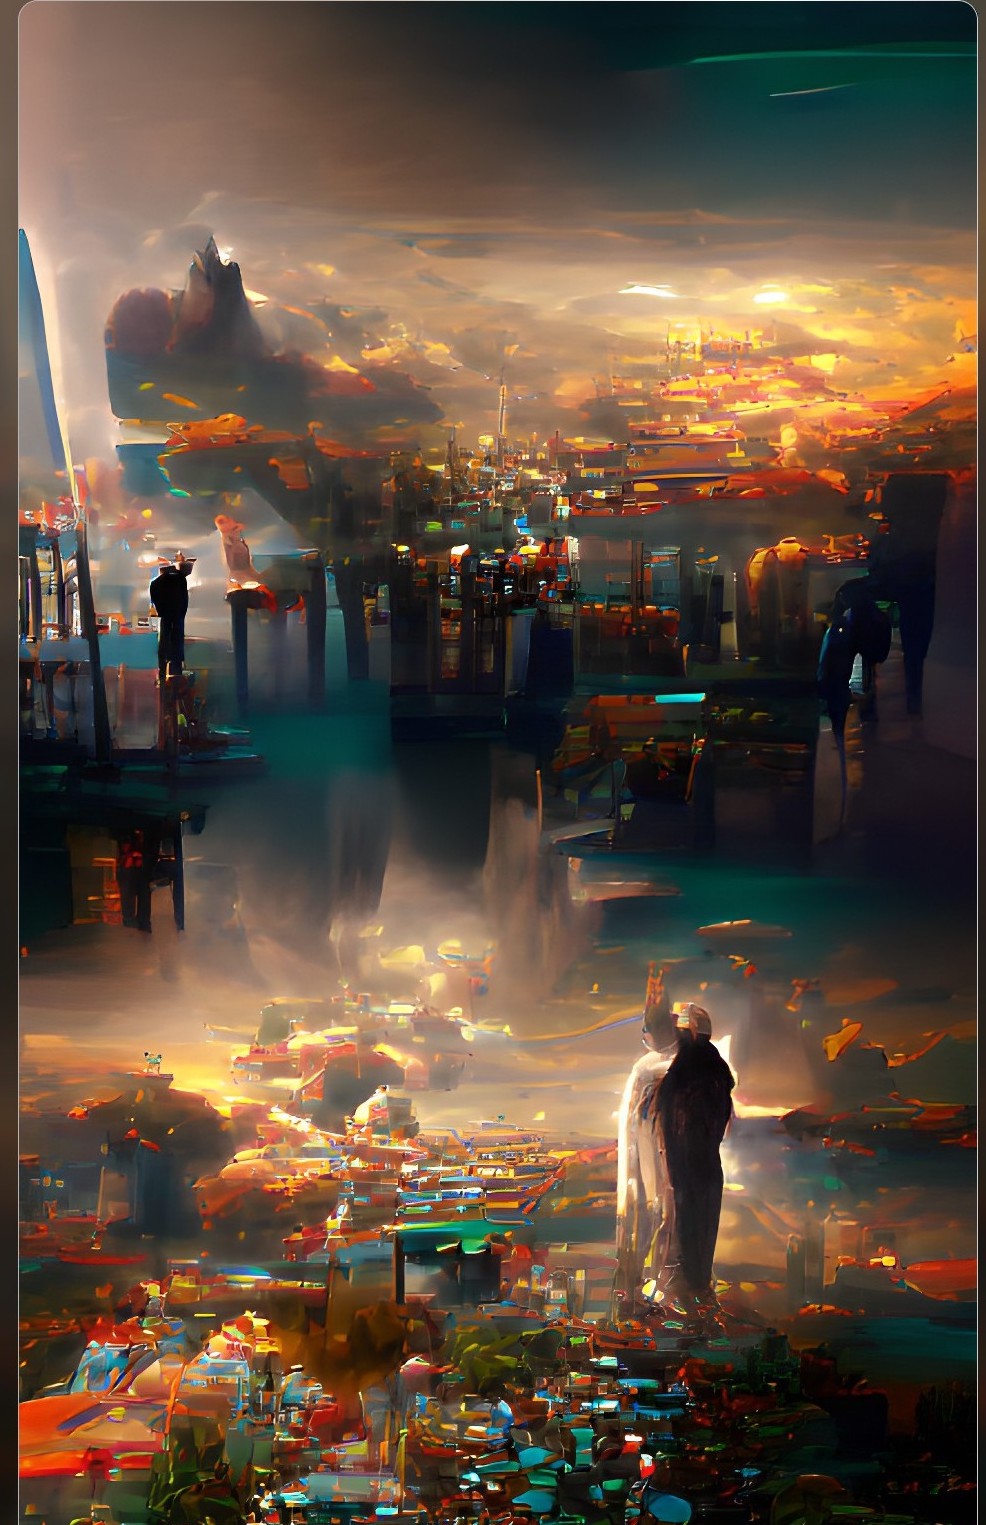 Afterlife (Imaginary Movie Poster) by 3li9md on DeviantArt